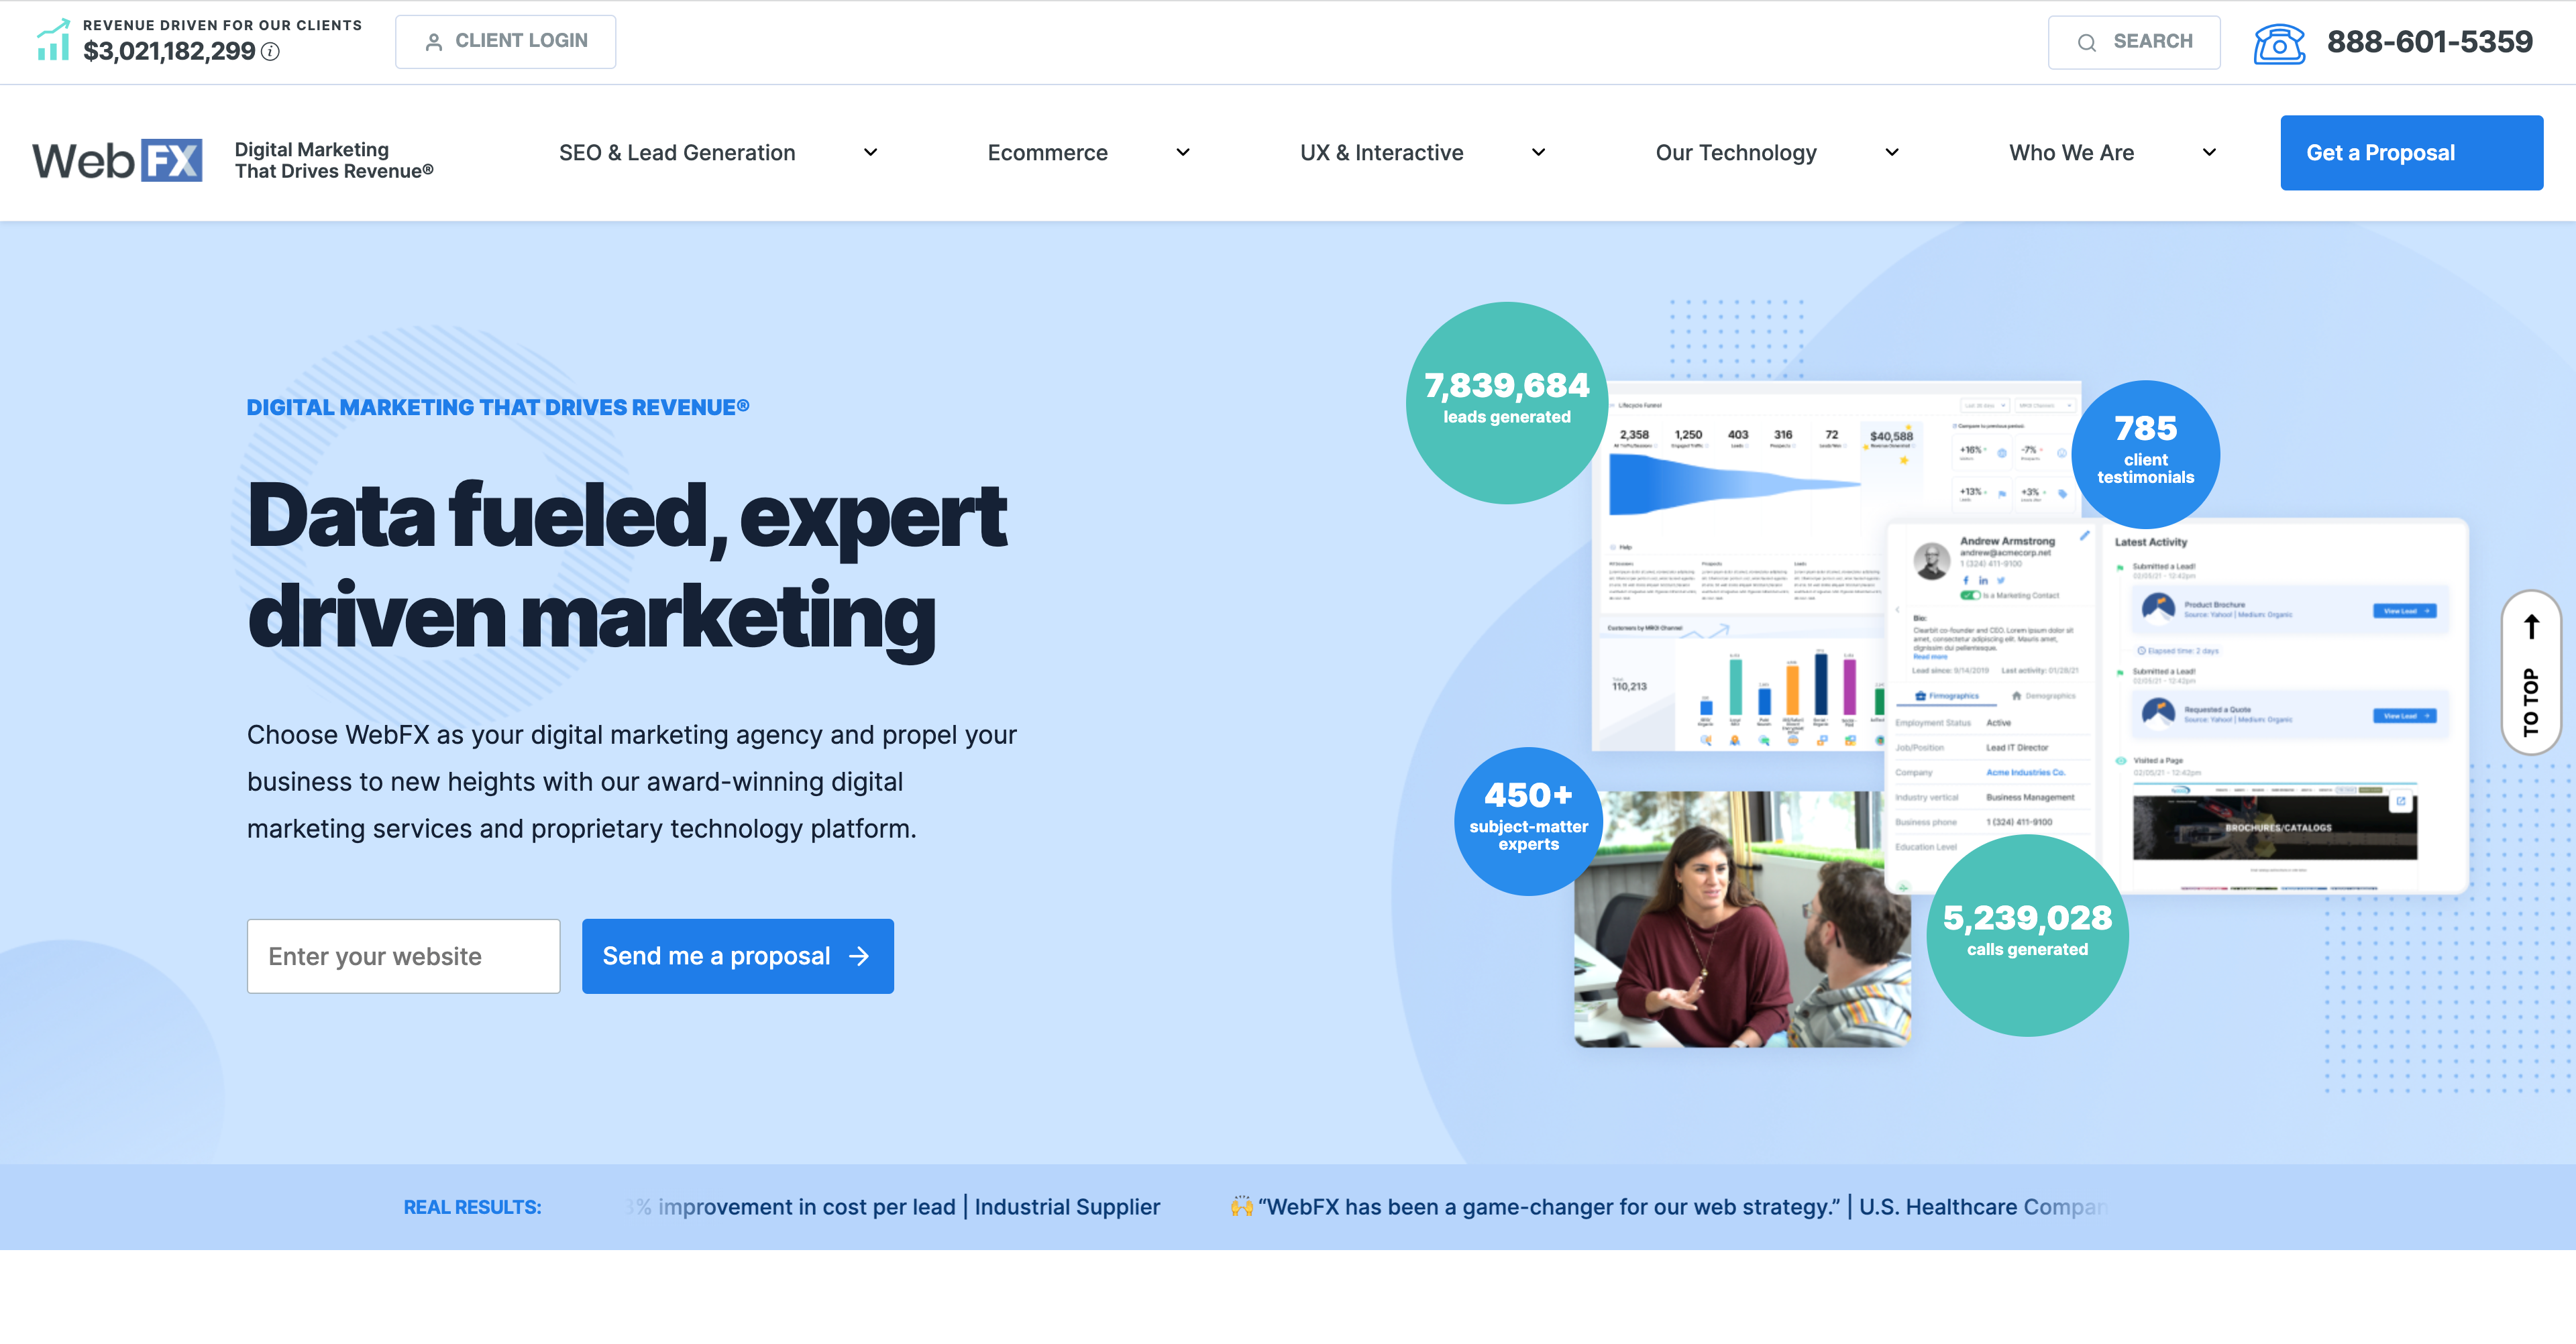 WebFX digital marketing homepage.